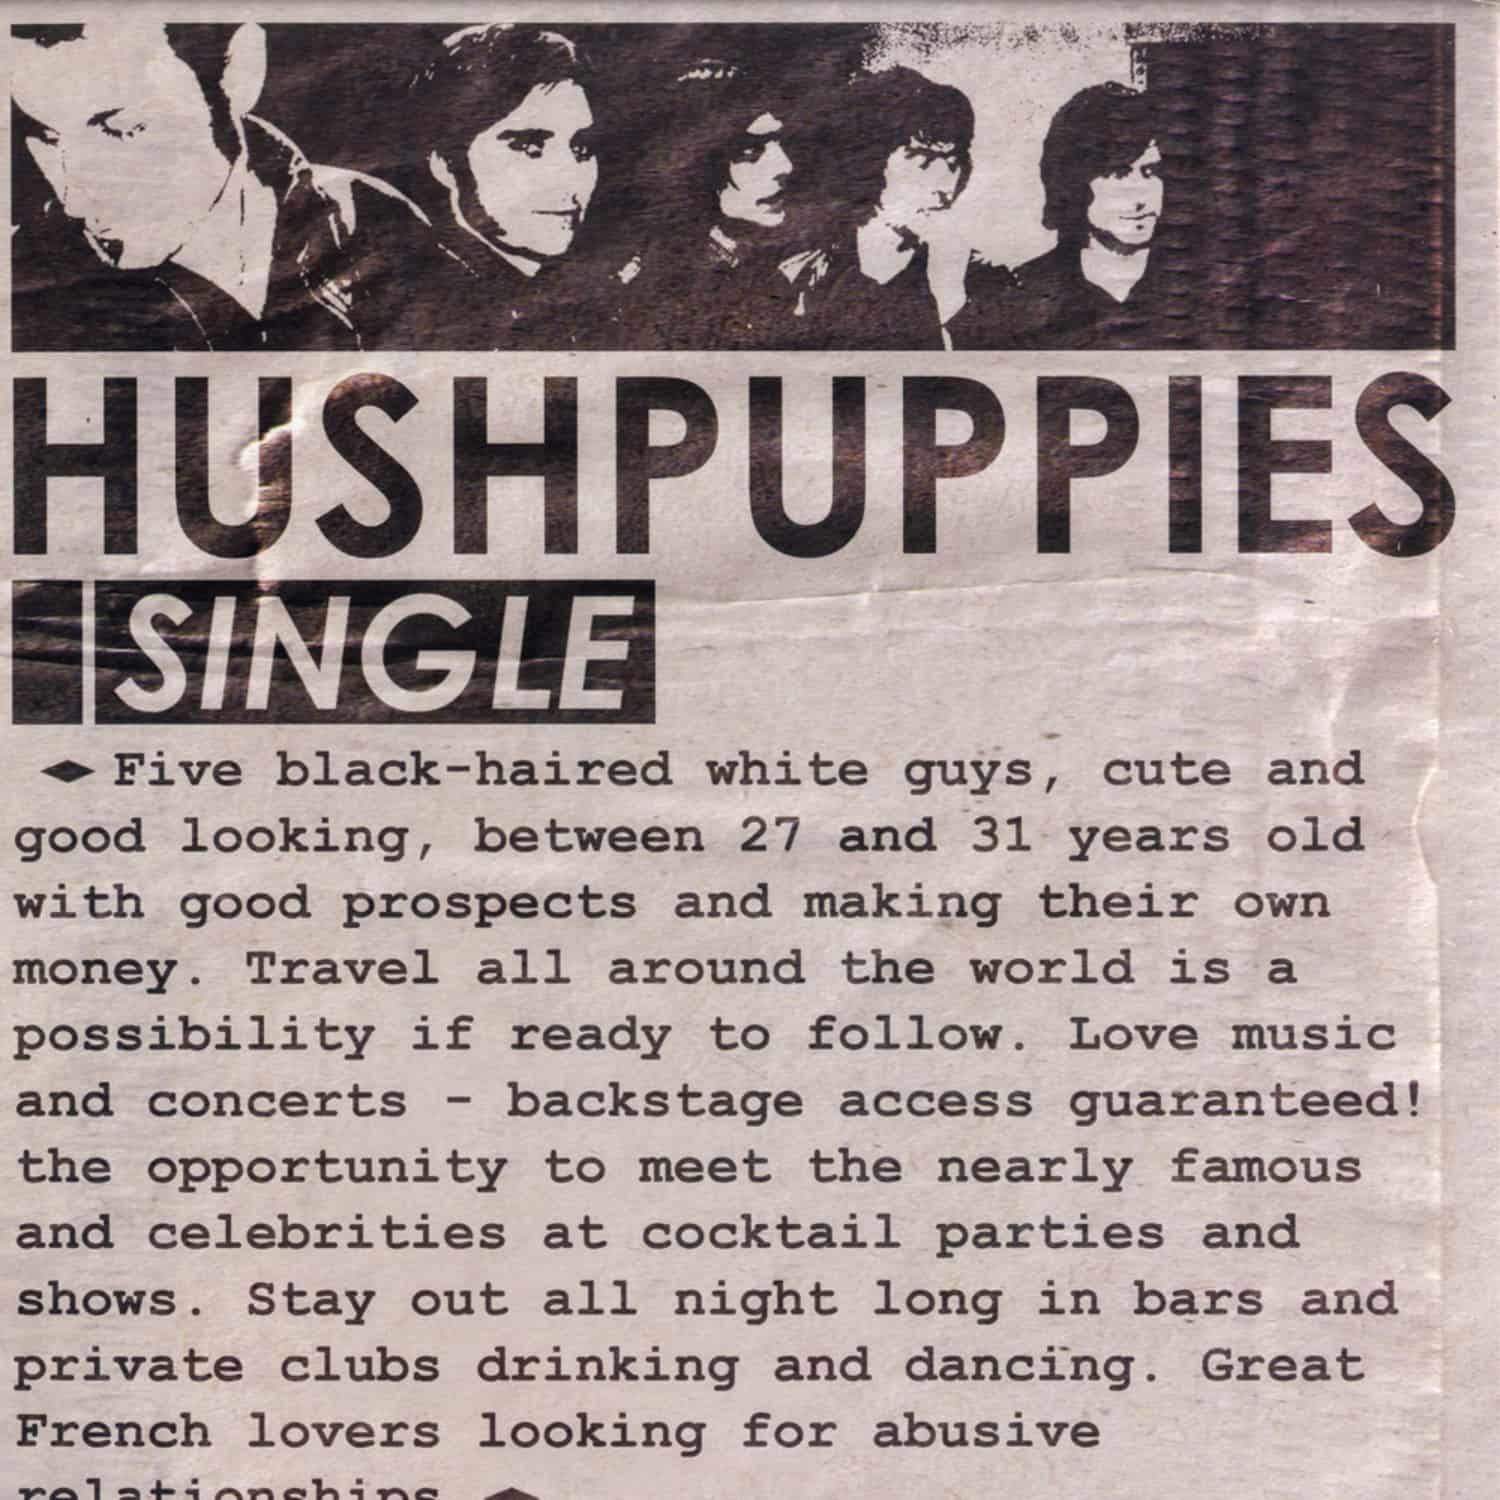 Hush Puppies - SINGLE